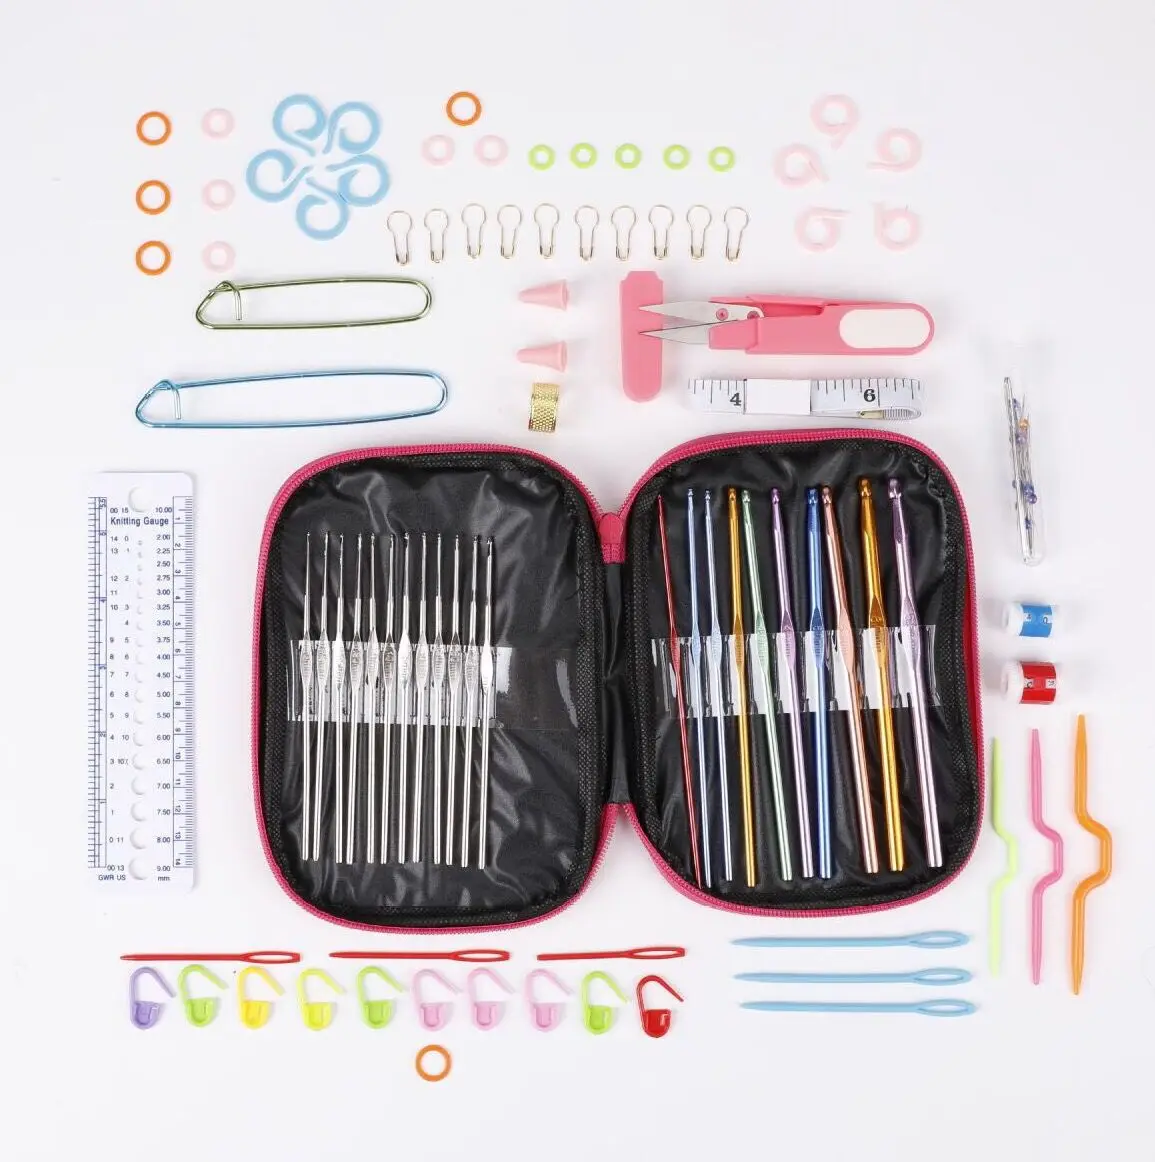 Wholesale Supplies 100pcs DIY Aluminum Crochet Kit With Yarn Knitting Needles Sewing Kit Tools Crochet Hook Set